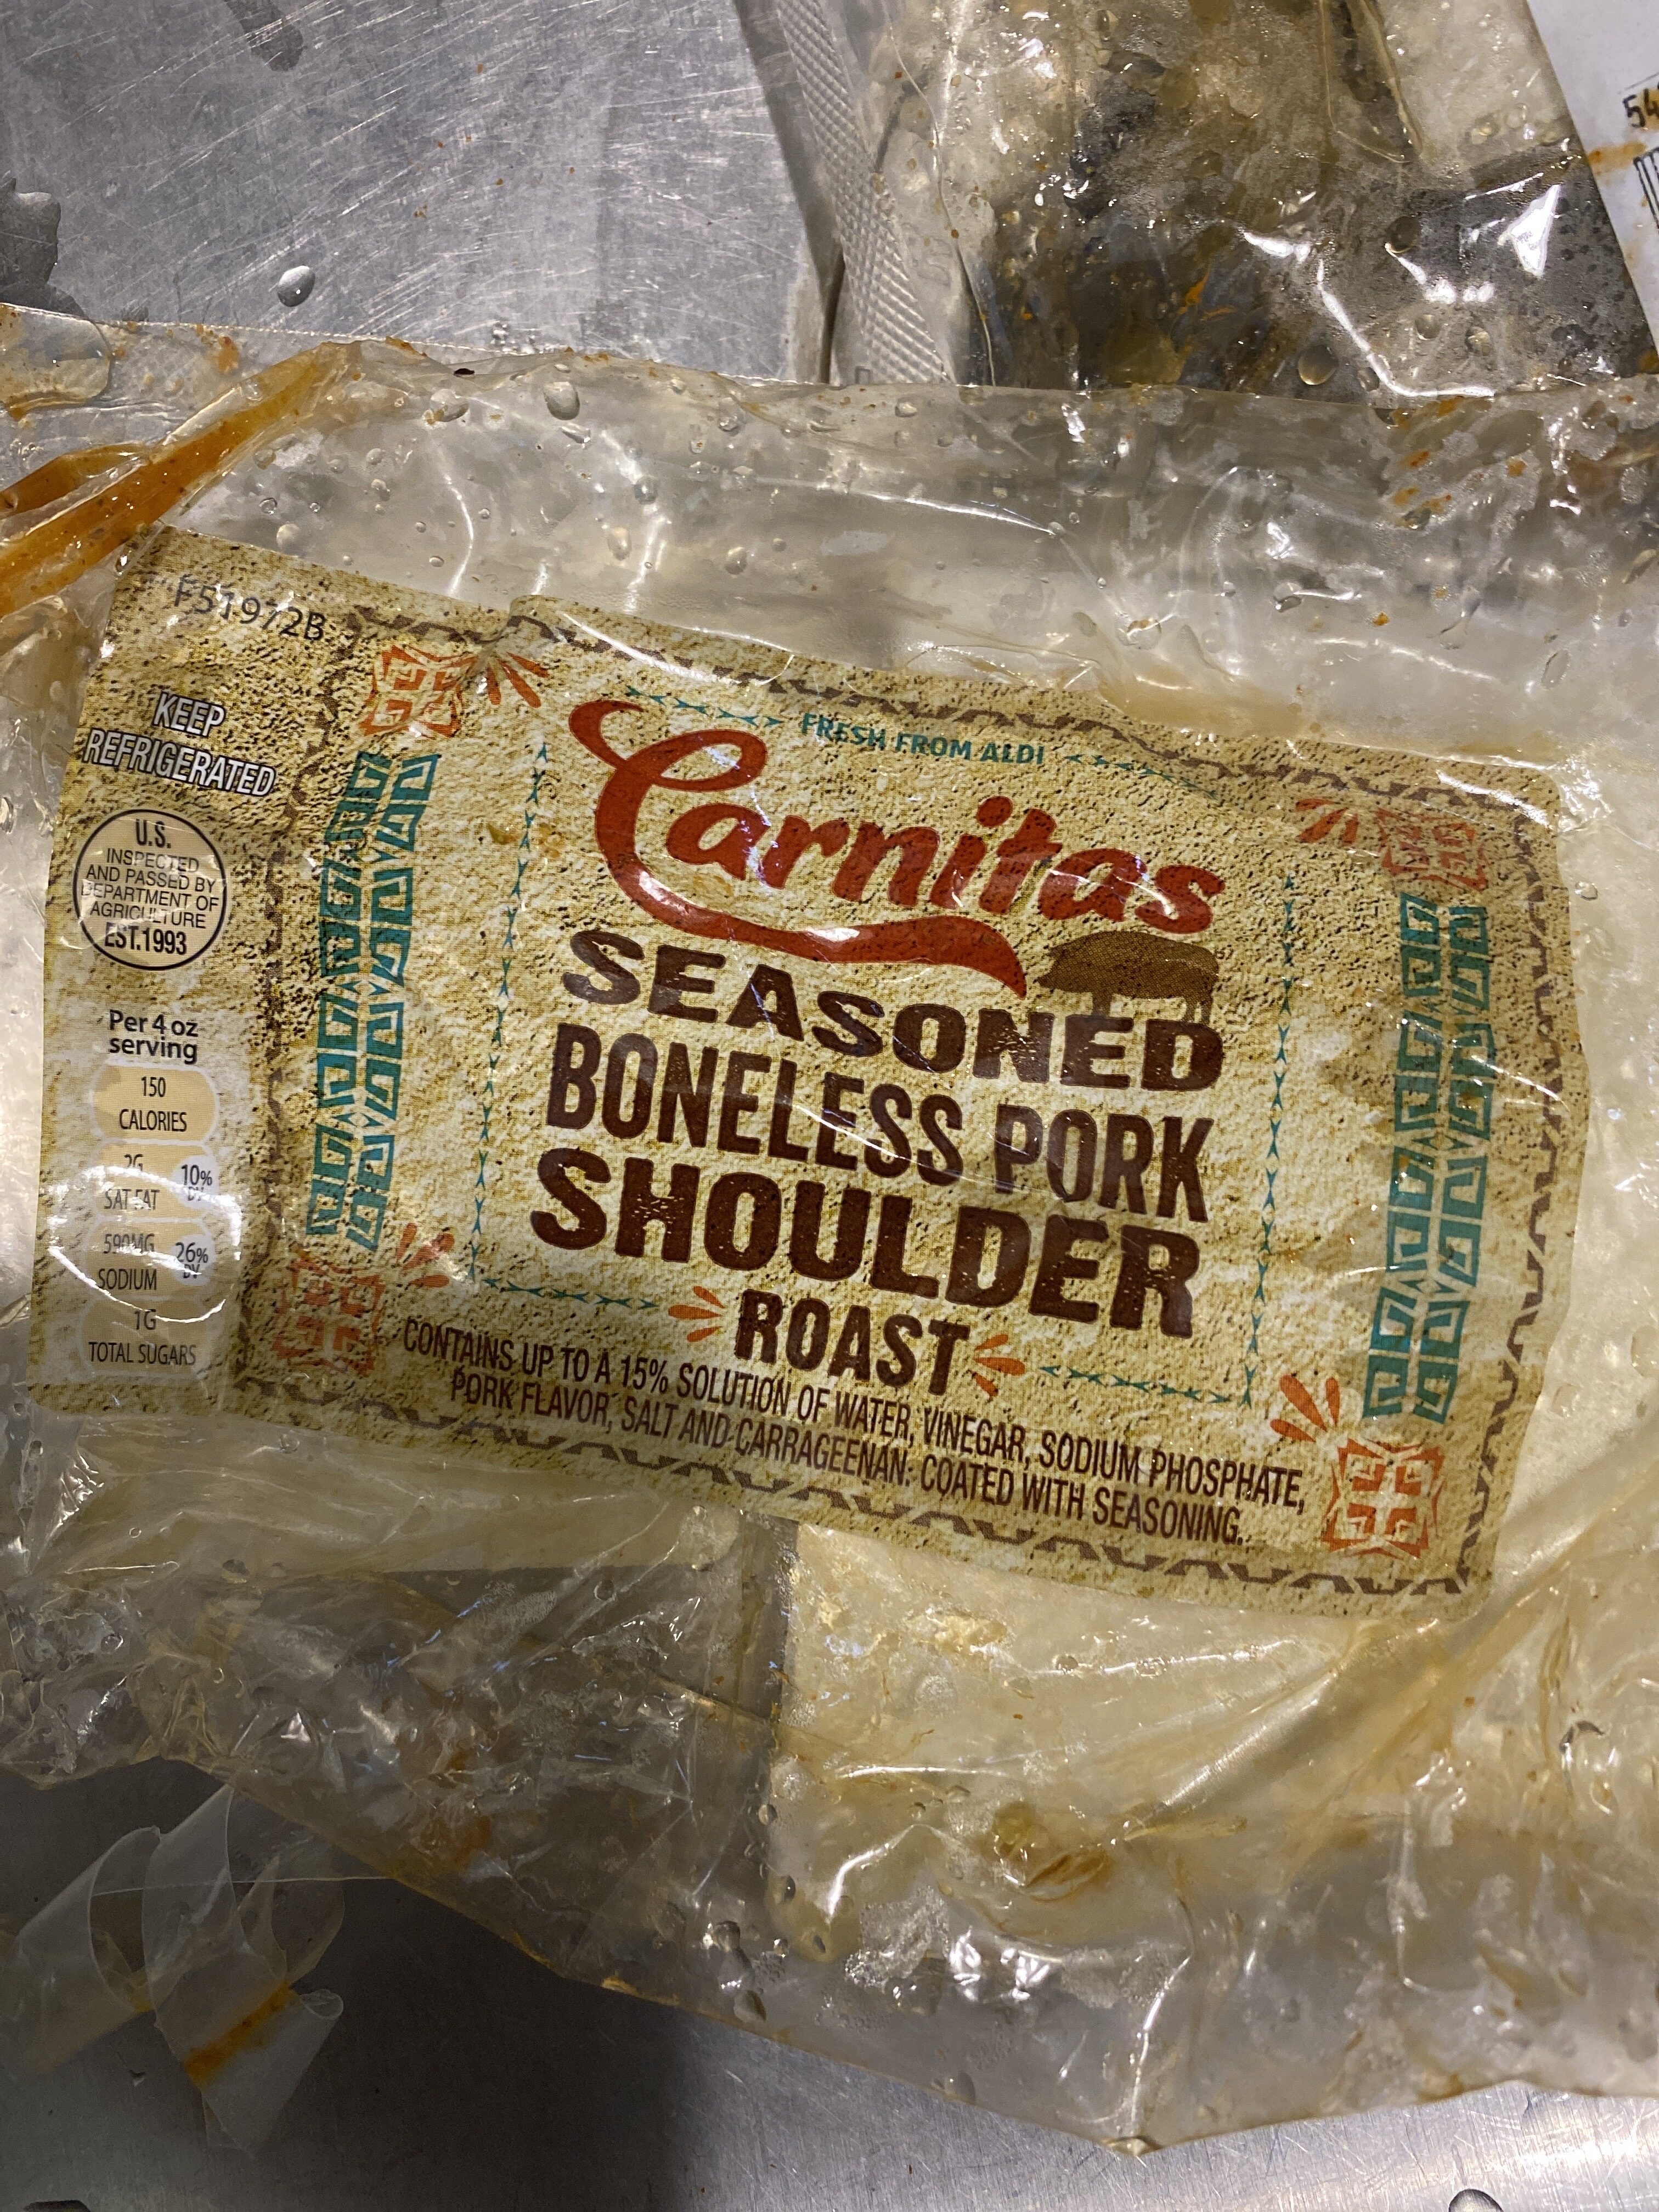 Carnitas seasoned boneless pork shoulder roast - Product